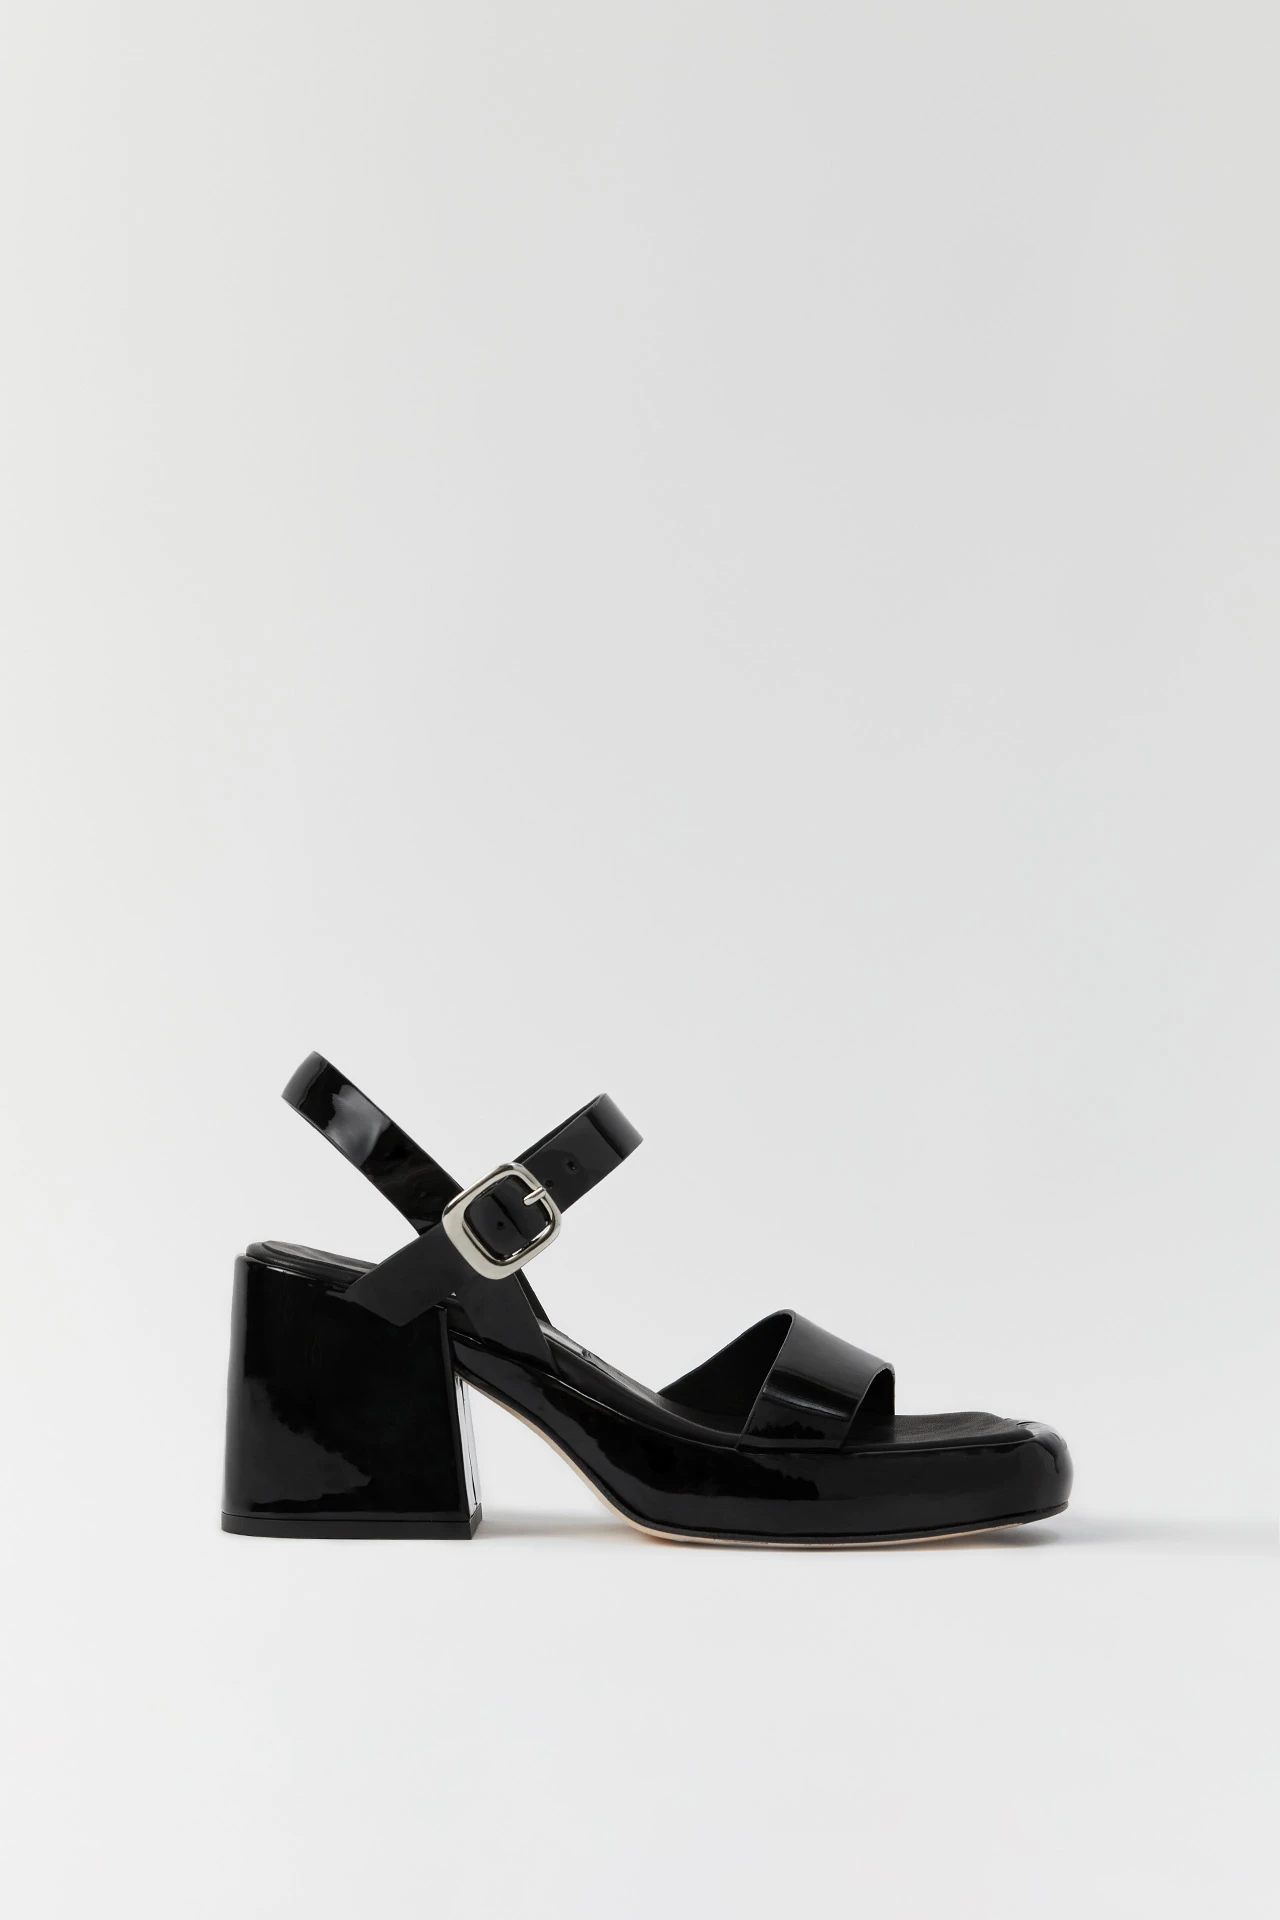 Miista-beverly-black-sandals-01